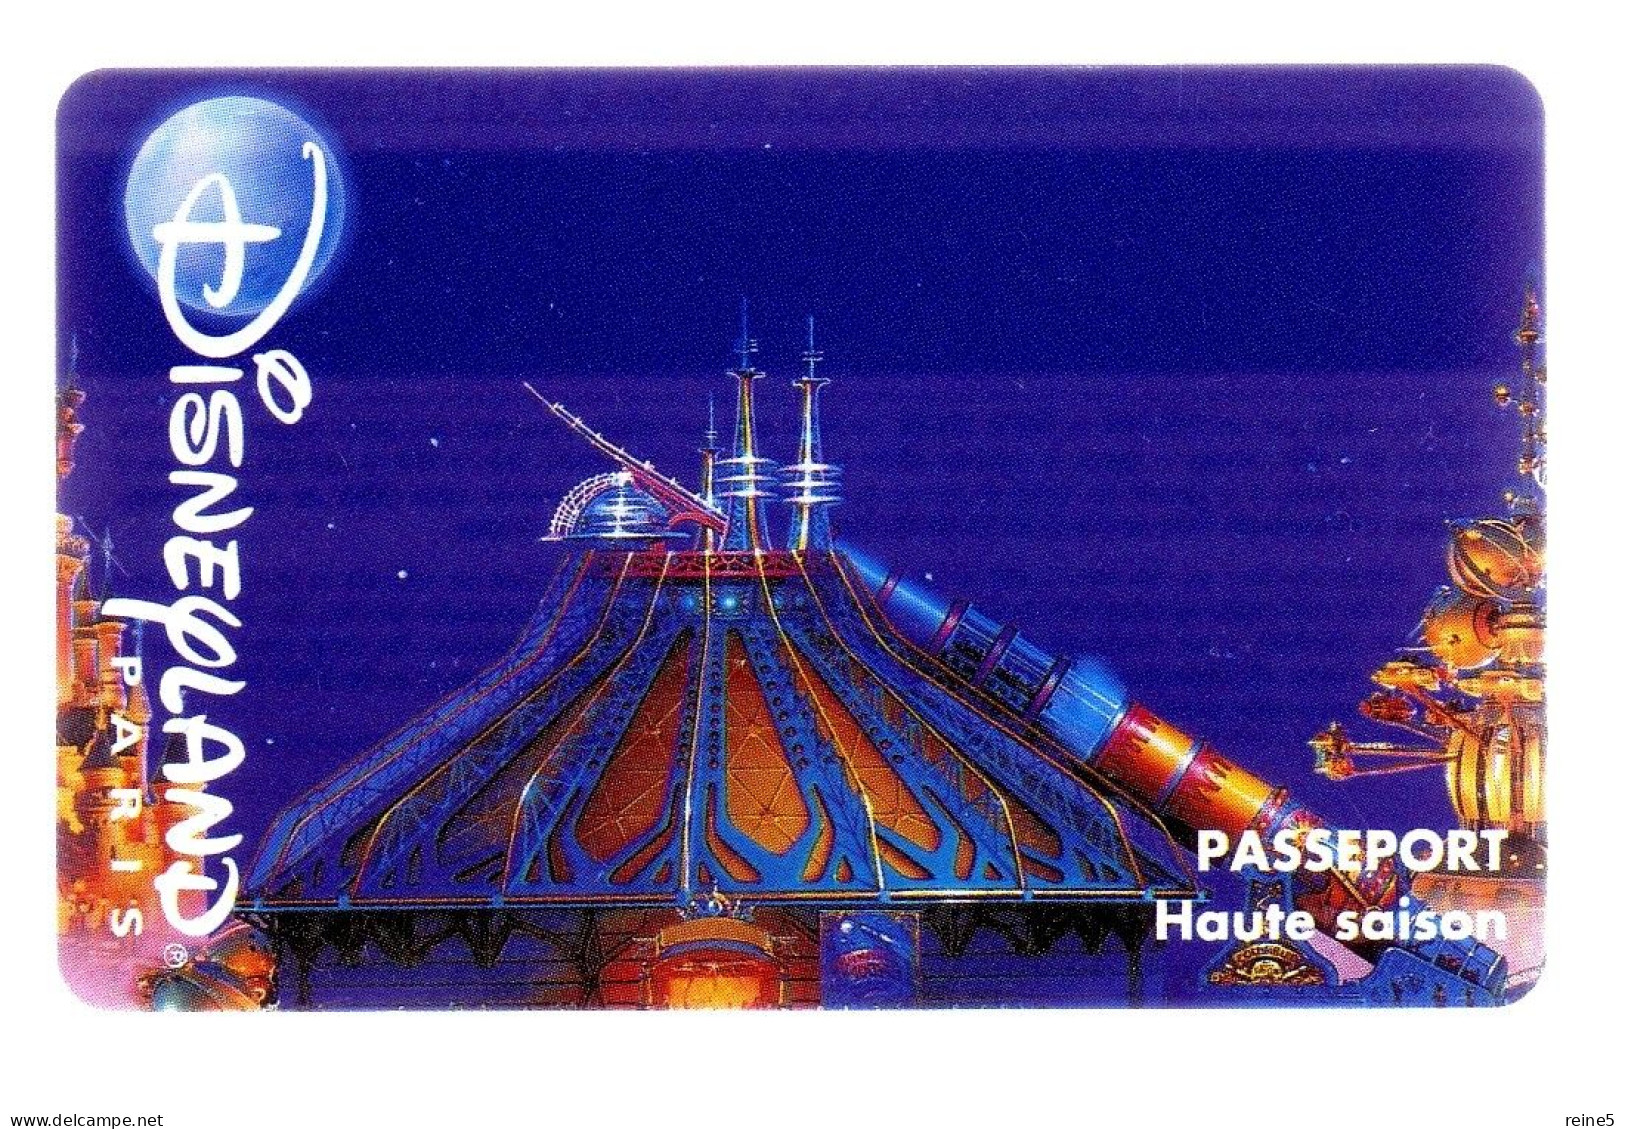 PASSEPORT HAUTE SAISON DISNEYLAND PARIS -TRES BON ETAT -REF-PASS DISNEY-15 - Toegangsticket Disney